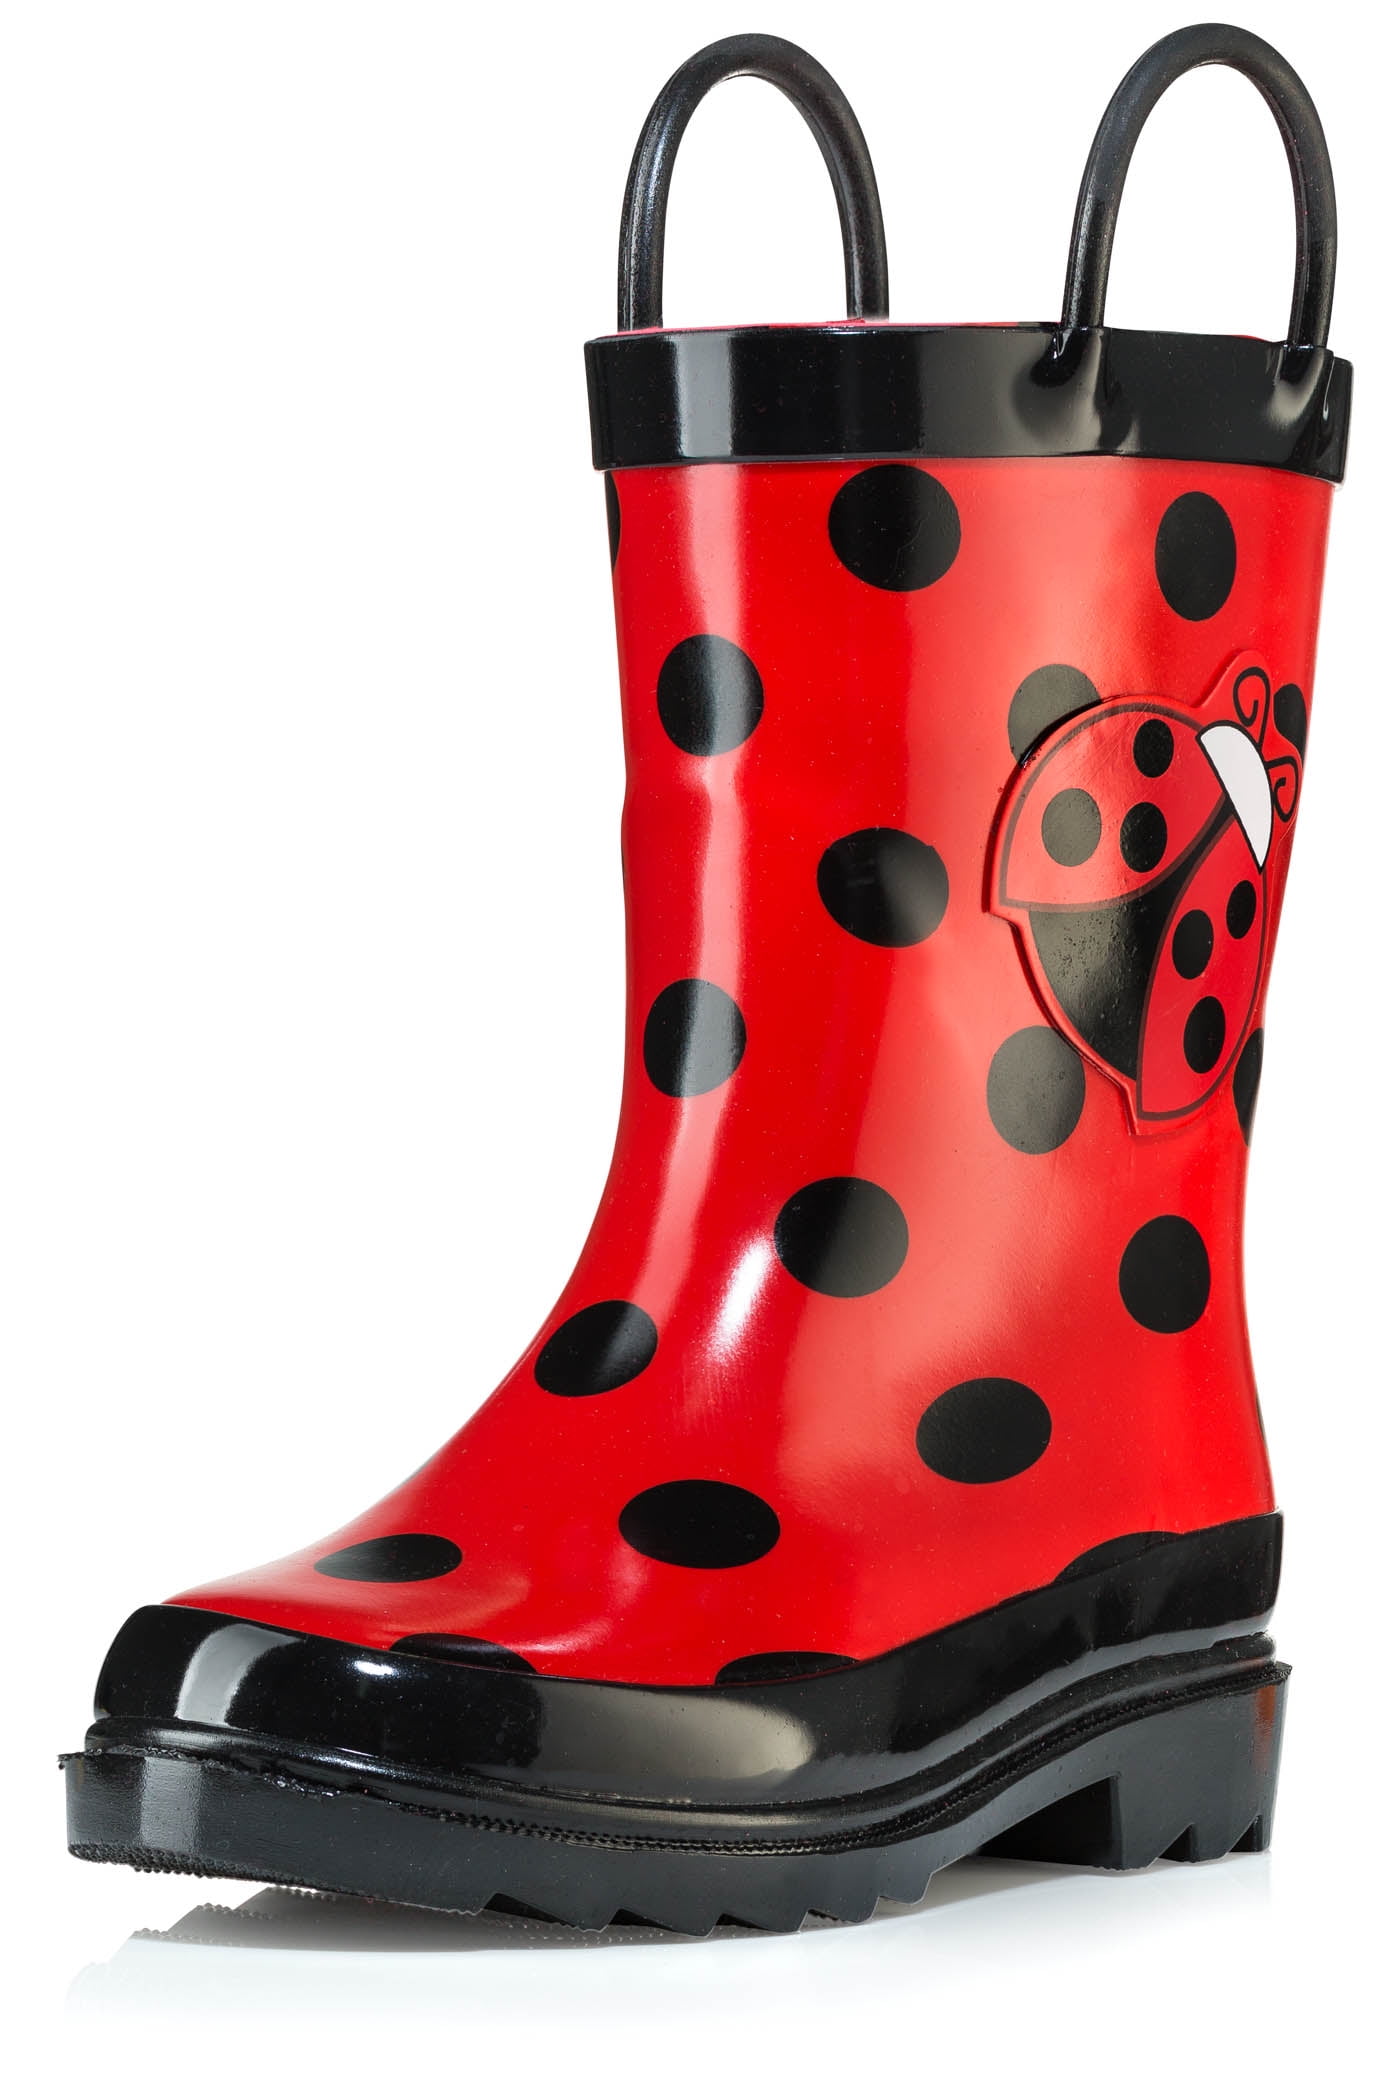 Kidorable Ladybug Rain Boot Size 8 M US Toddler 